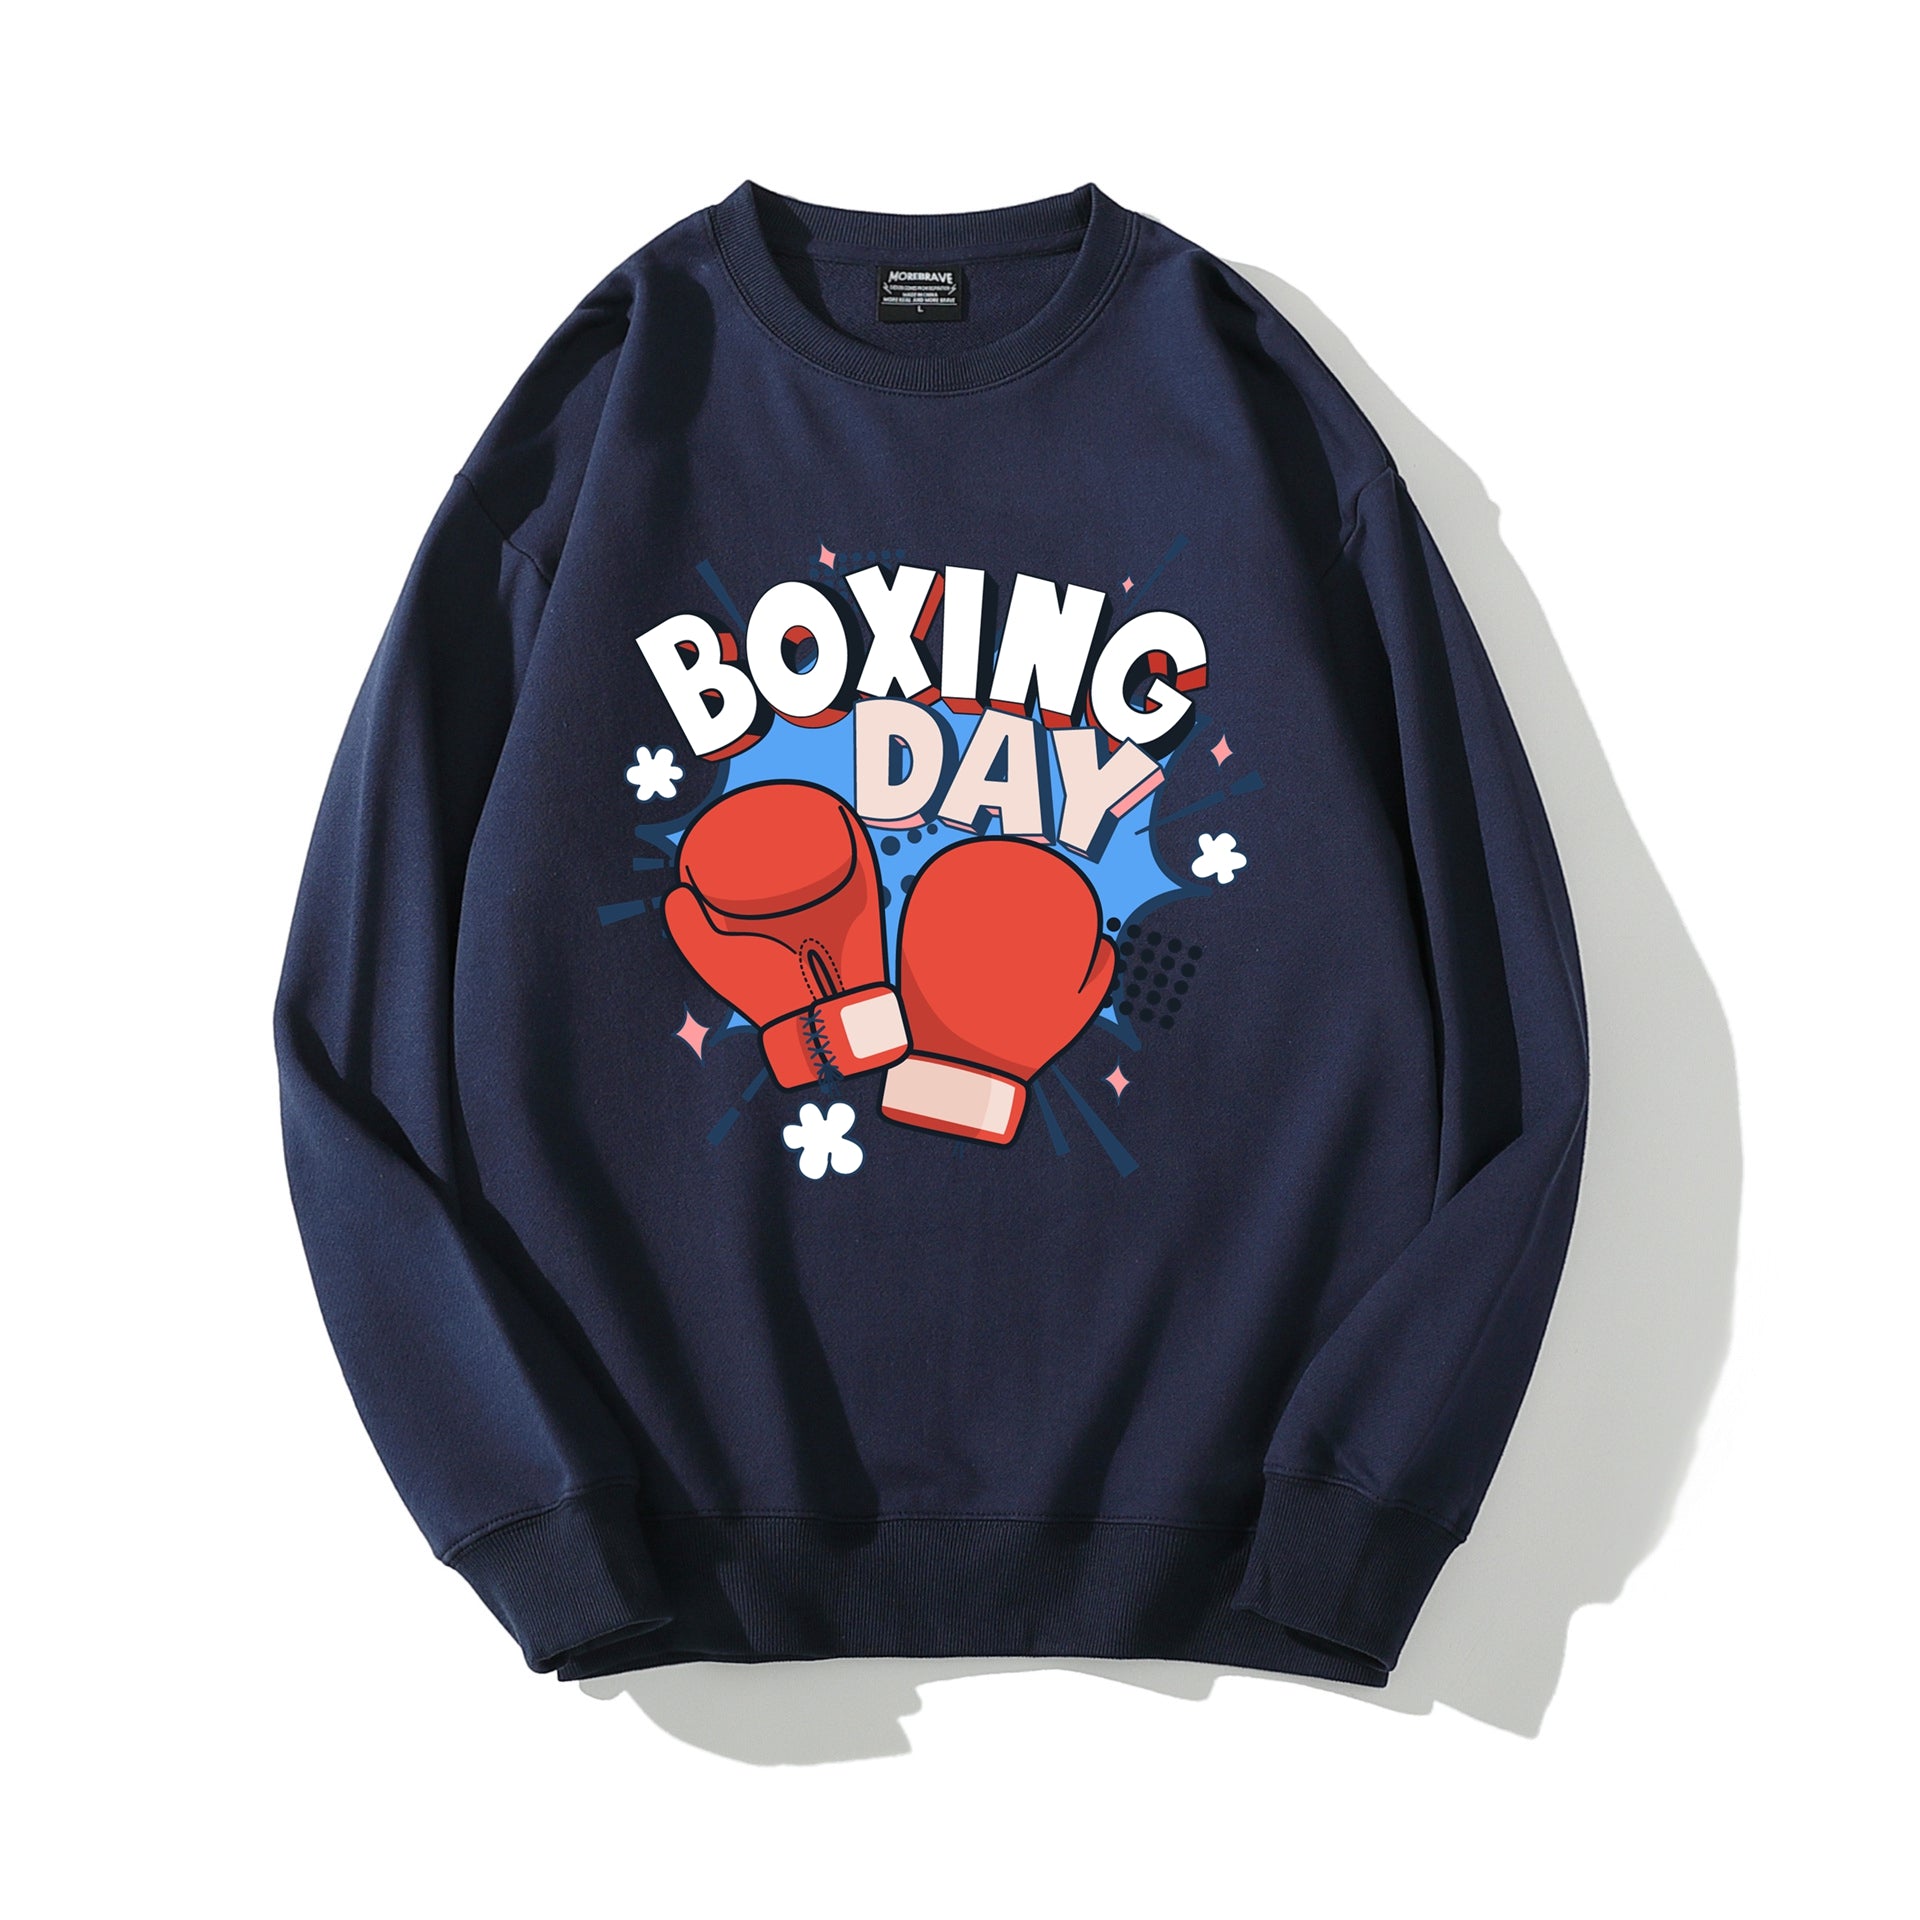 Boxing Sweatshirt Boxing Day Crewneck Cotton Tops Regular Fit